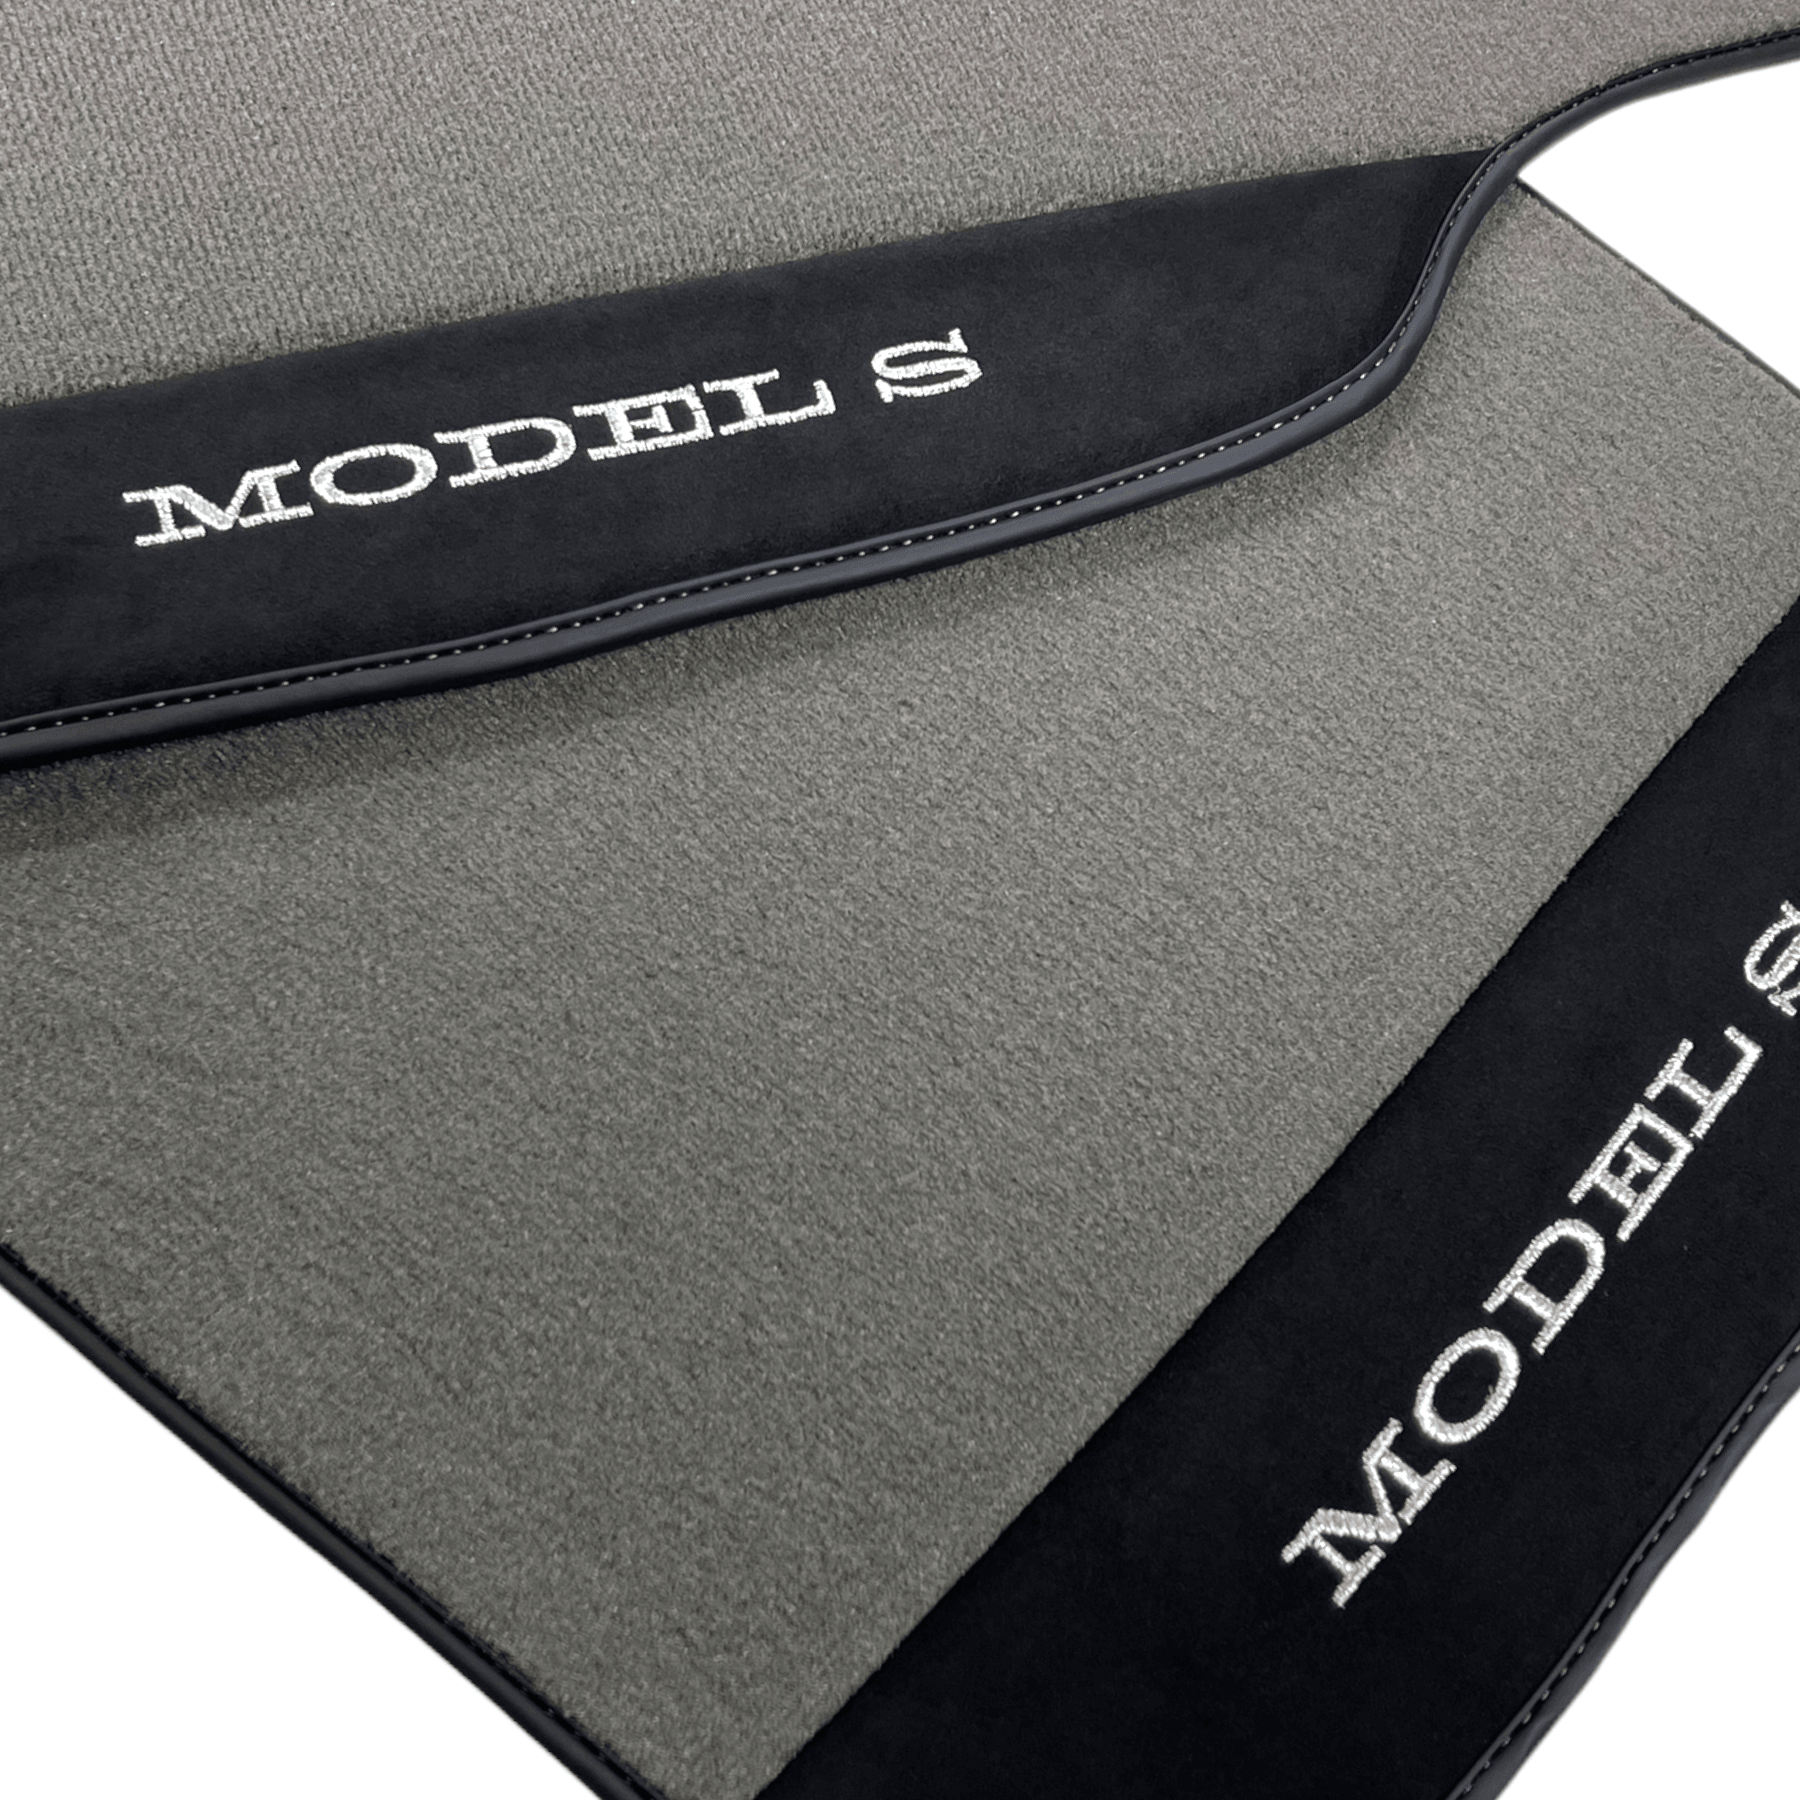 Gray Floor Mats For Tesla Model S With Alcantara Leather - AutoWin